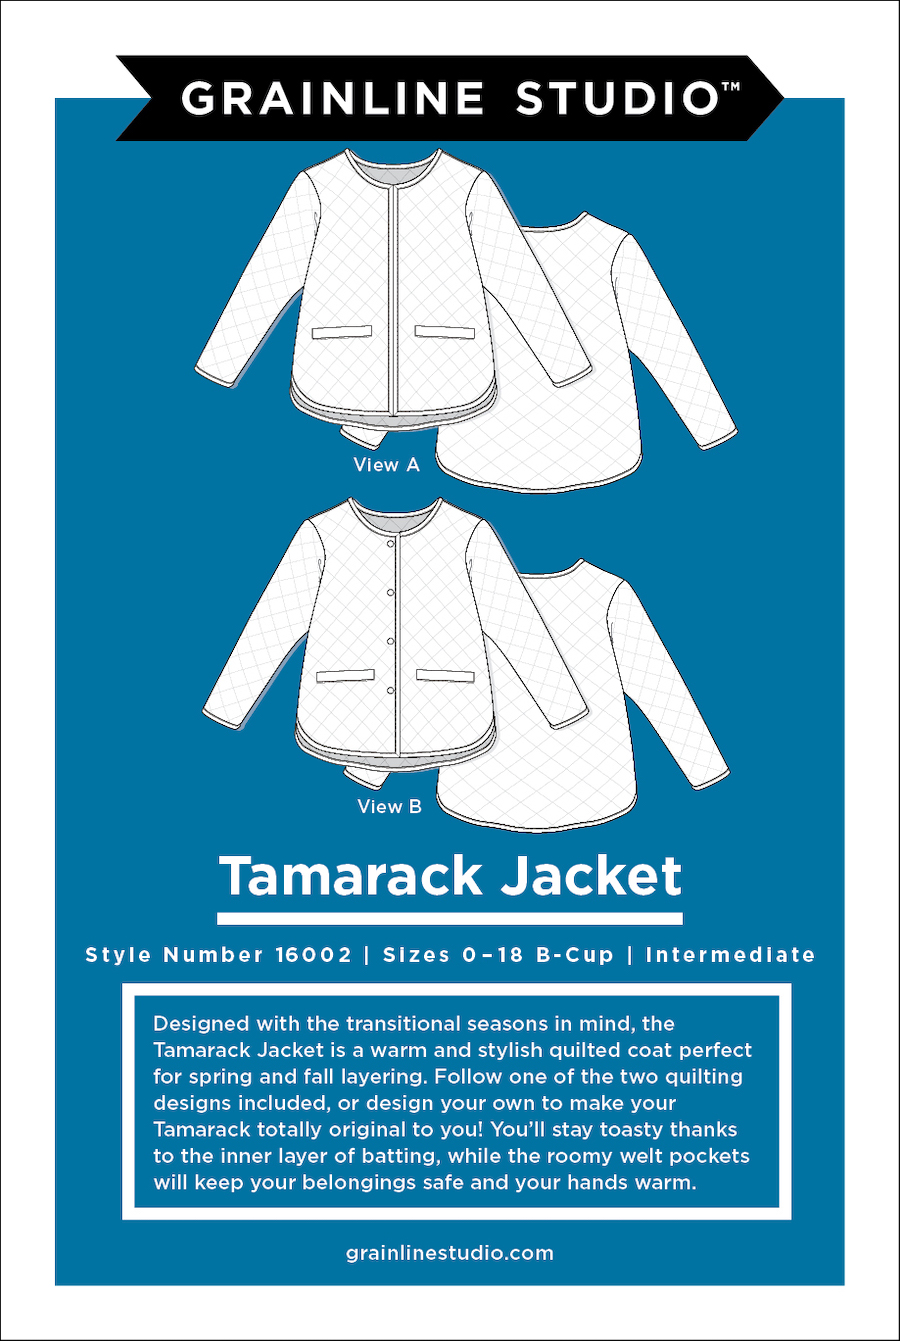 Tamarack Jacket Pattern - Grainline Studio - Wholesale by Hantex Ltd UK EU